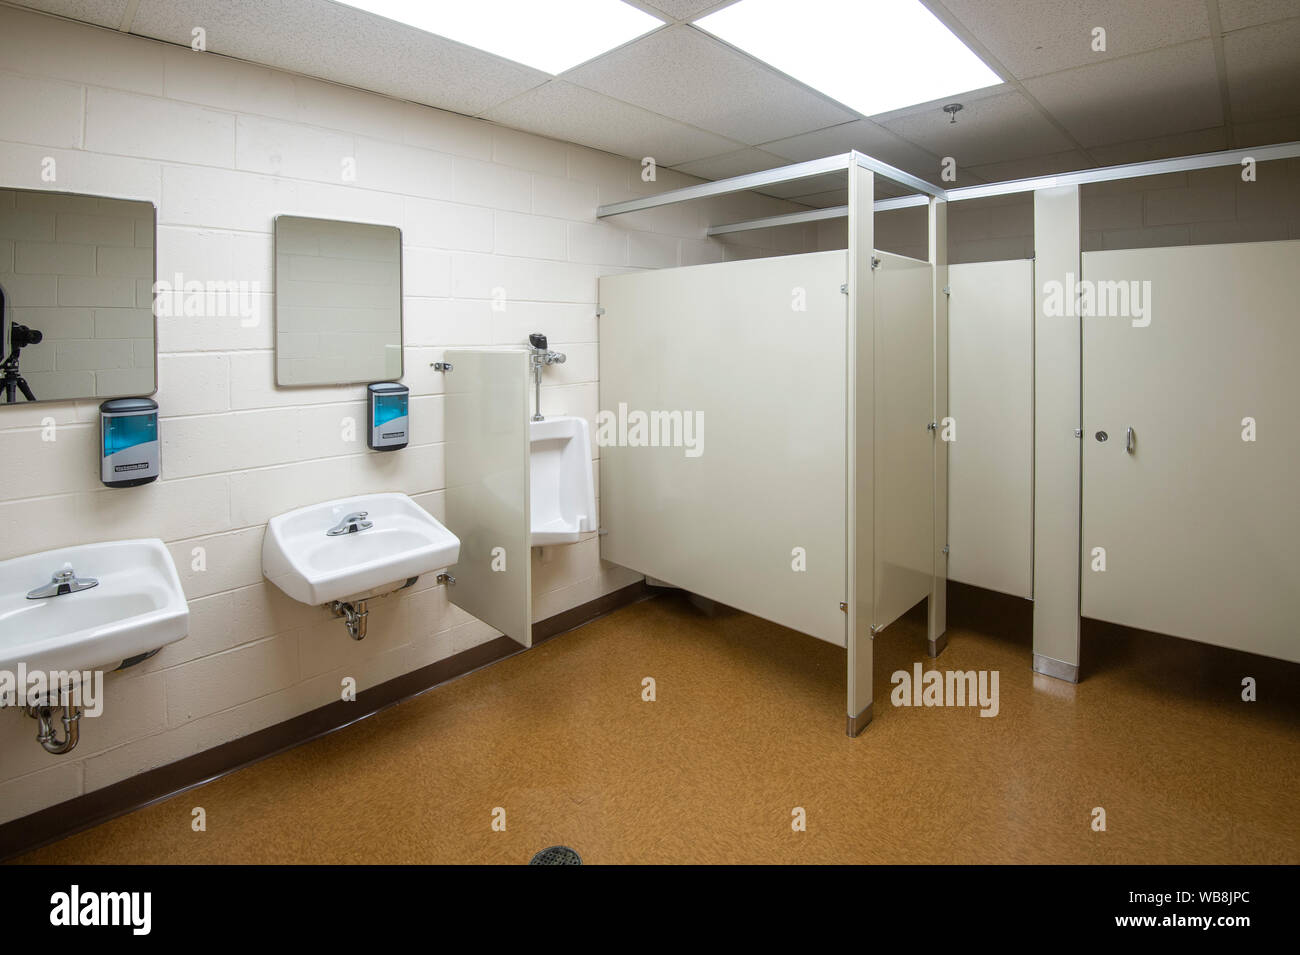 Men's Public Restroom Bathroom Stock Photo